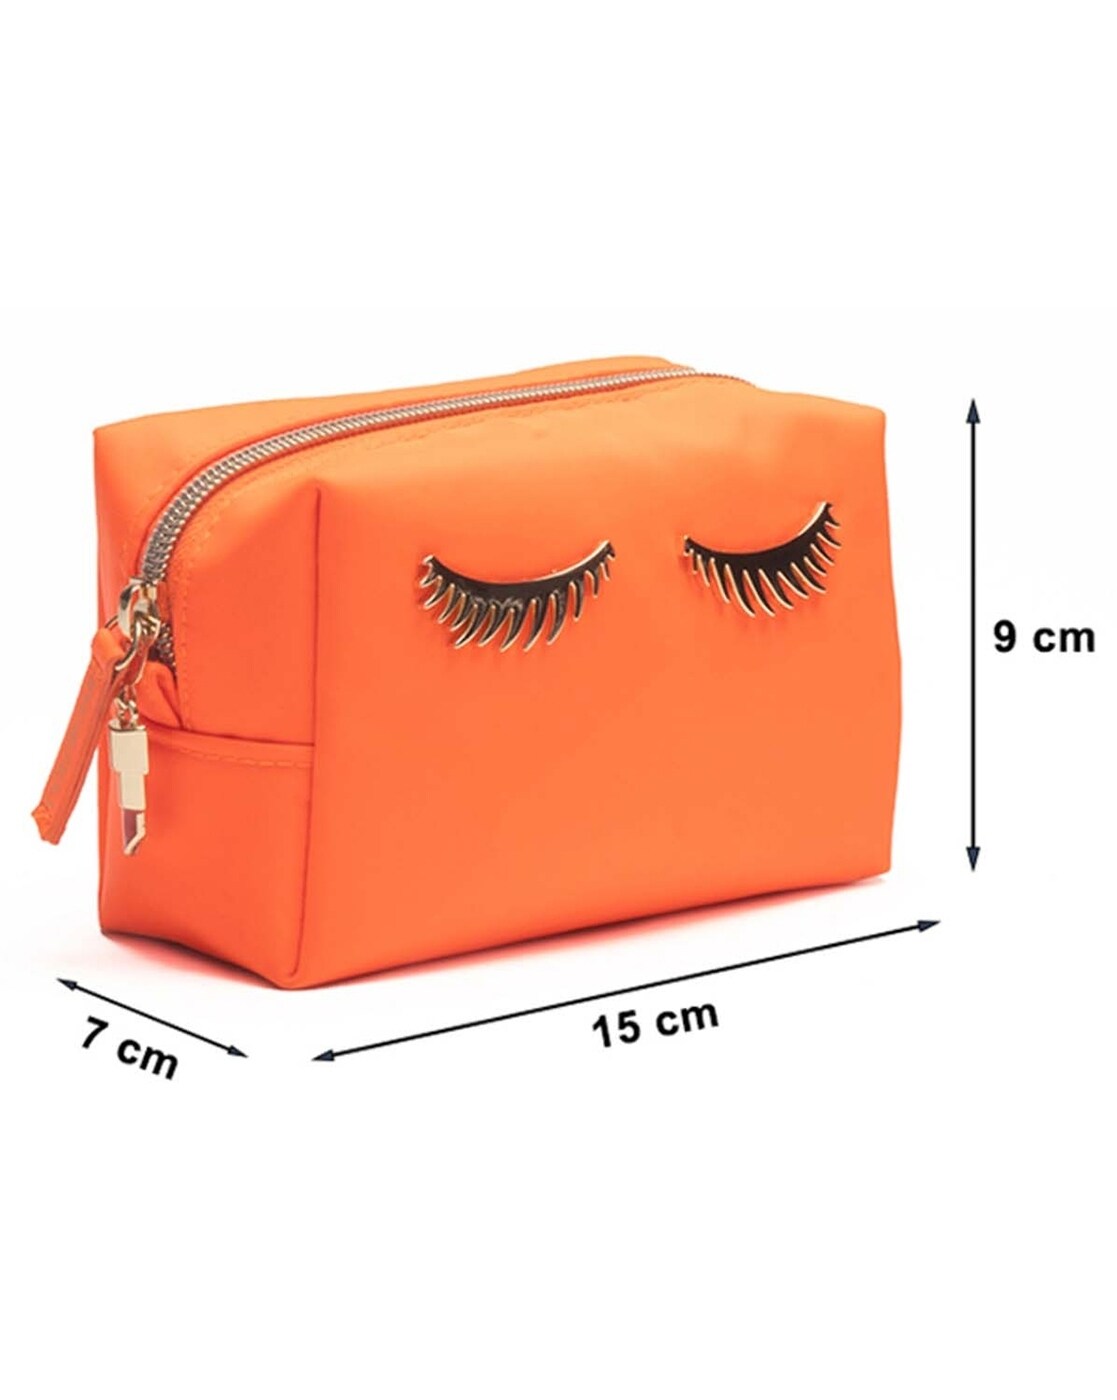 Buy Colorful Neon Strap for Purse Handbag Yellow Magenta Fuchsia Orange  Colorway Bright Sunshine Vibrant Happy Cheerful Spring Style Fashion Online  in India - Etsy